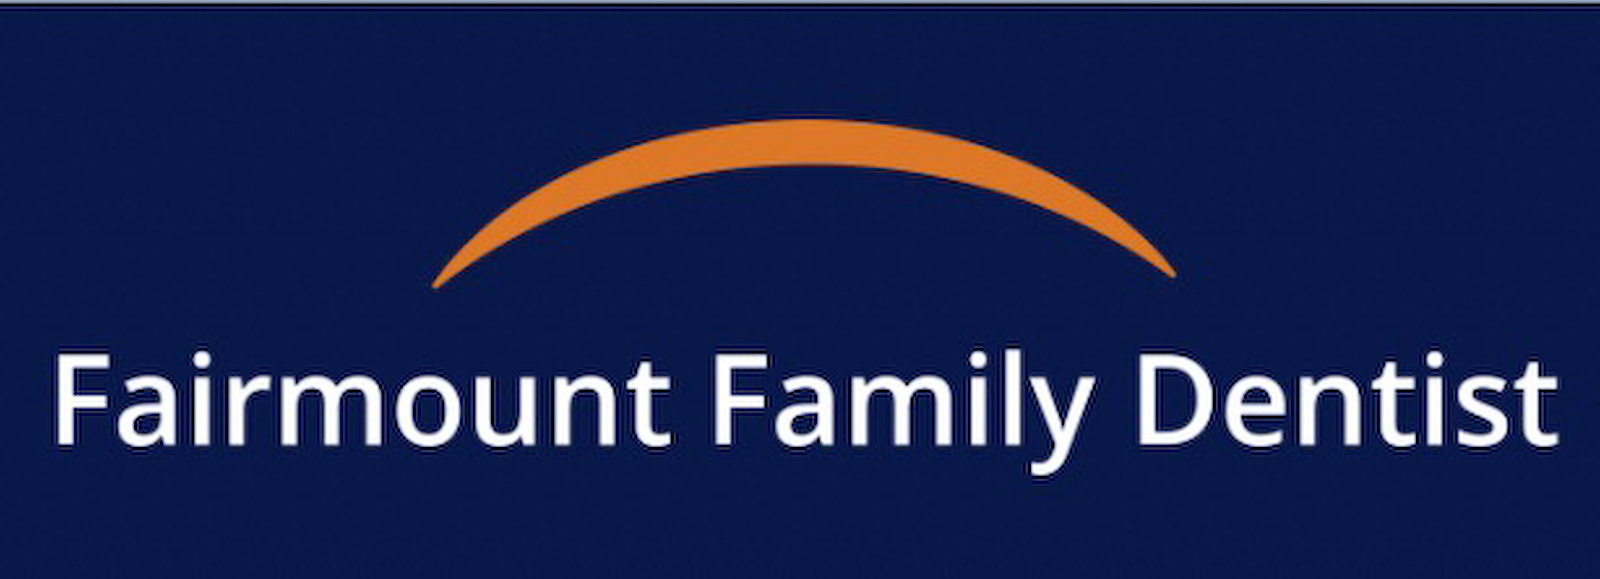 Fairmount Family Dentist